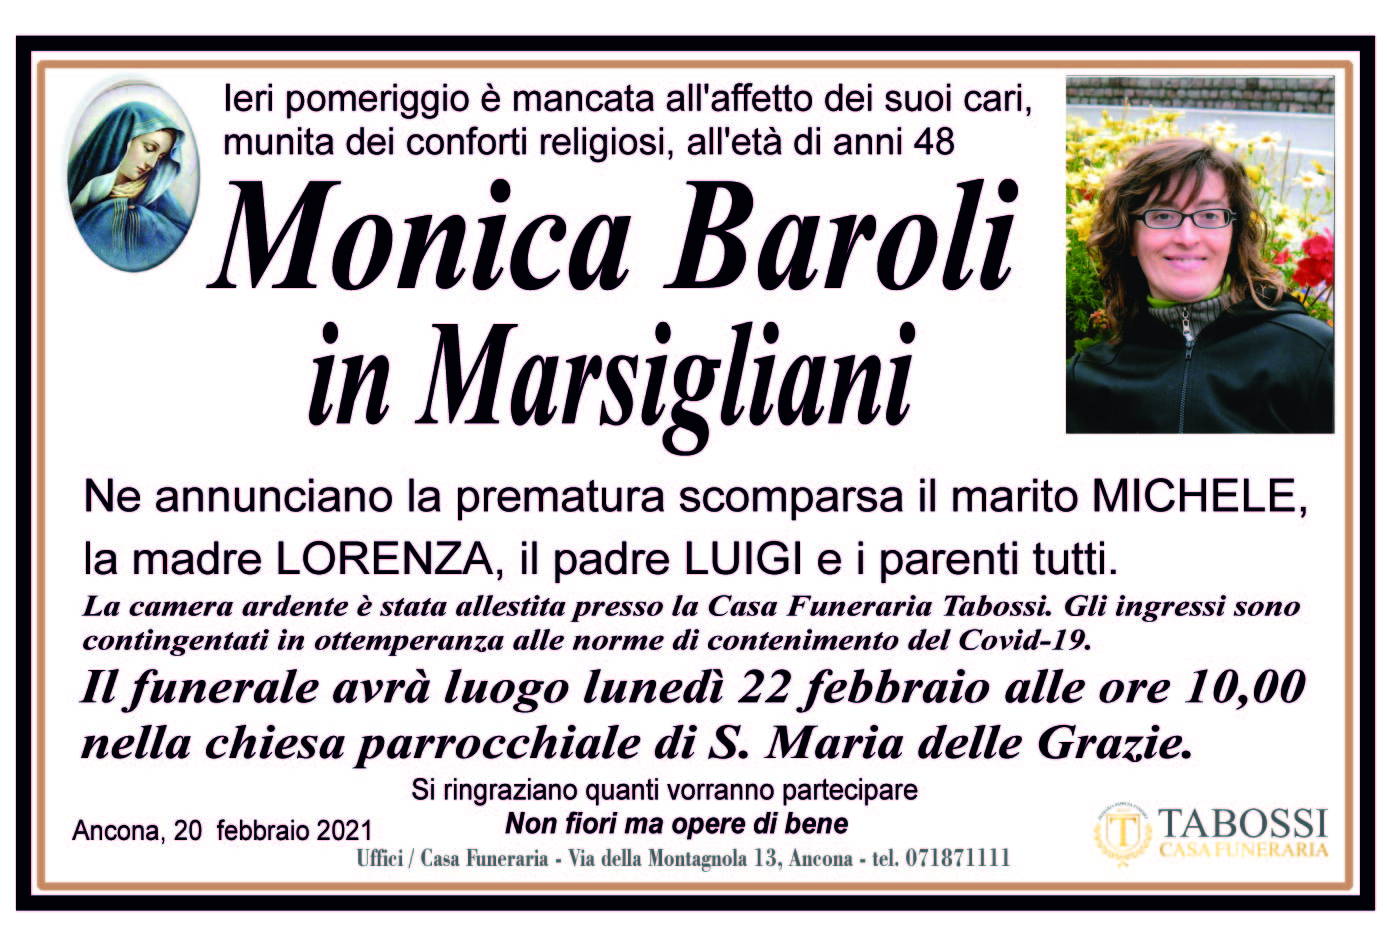 Monica Baroli